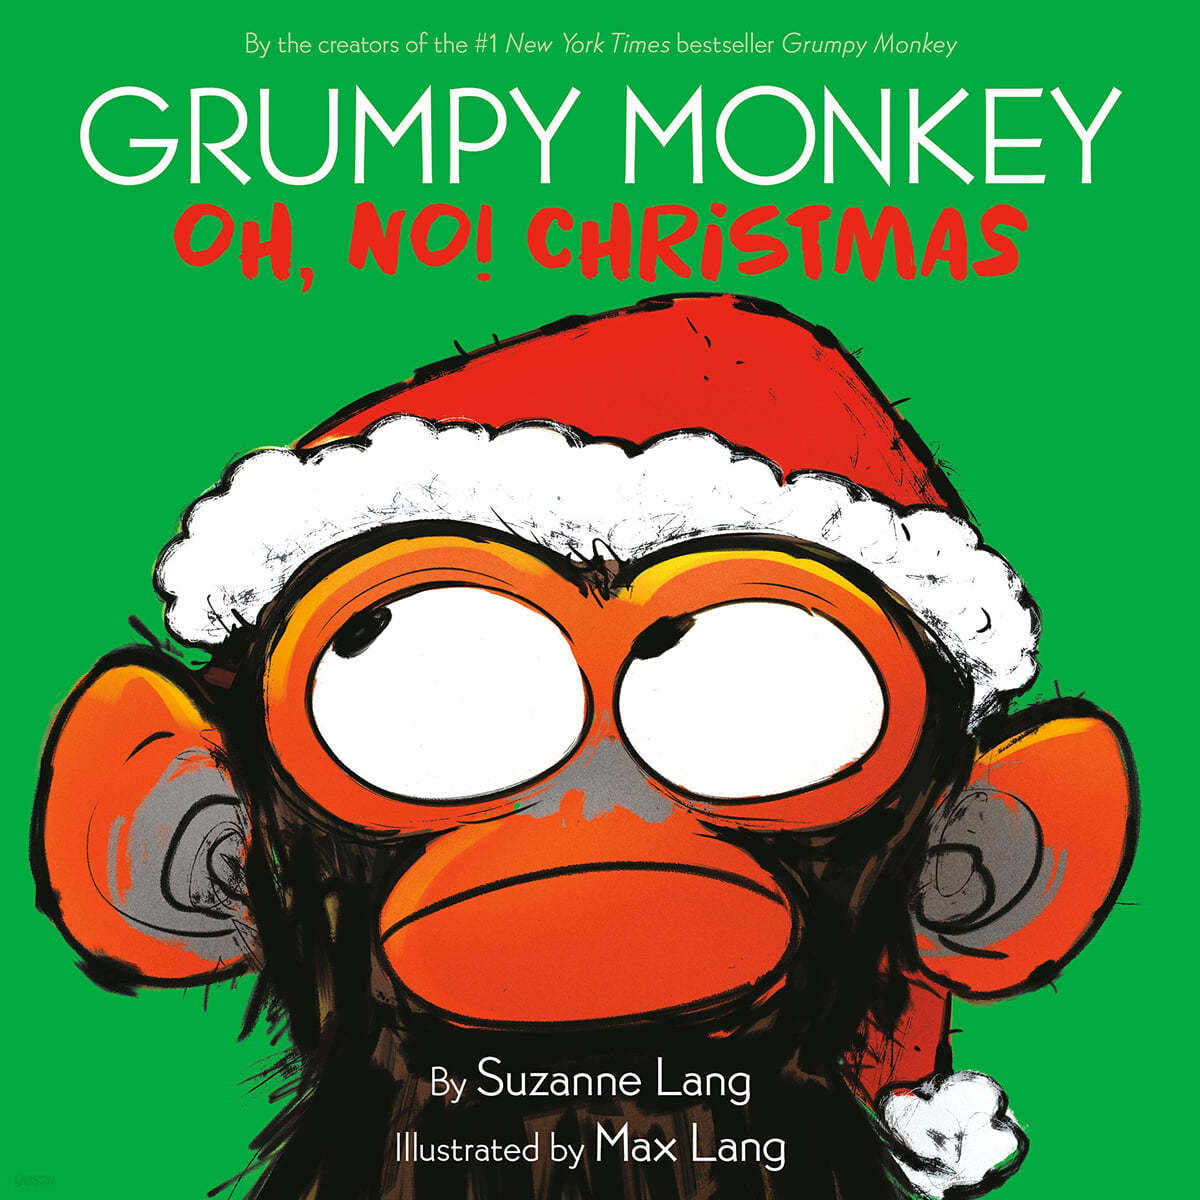 Grumpy monkey oh, no! Christmas